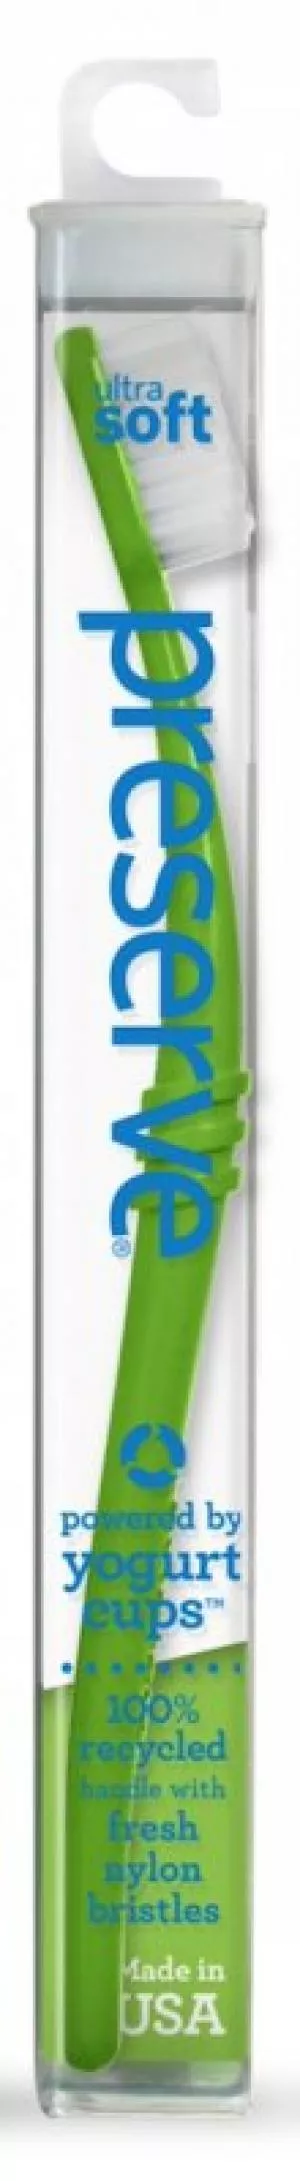 Preserve Tandbørste (medium) - grøn - af genbrugte yoghurtbægre